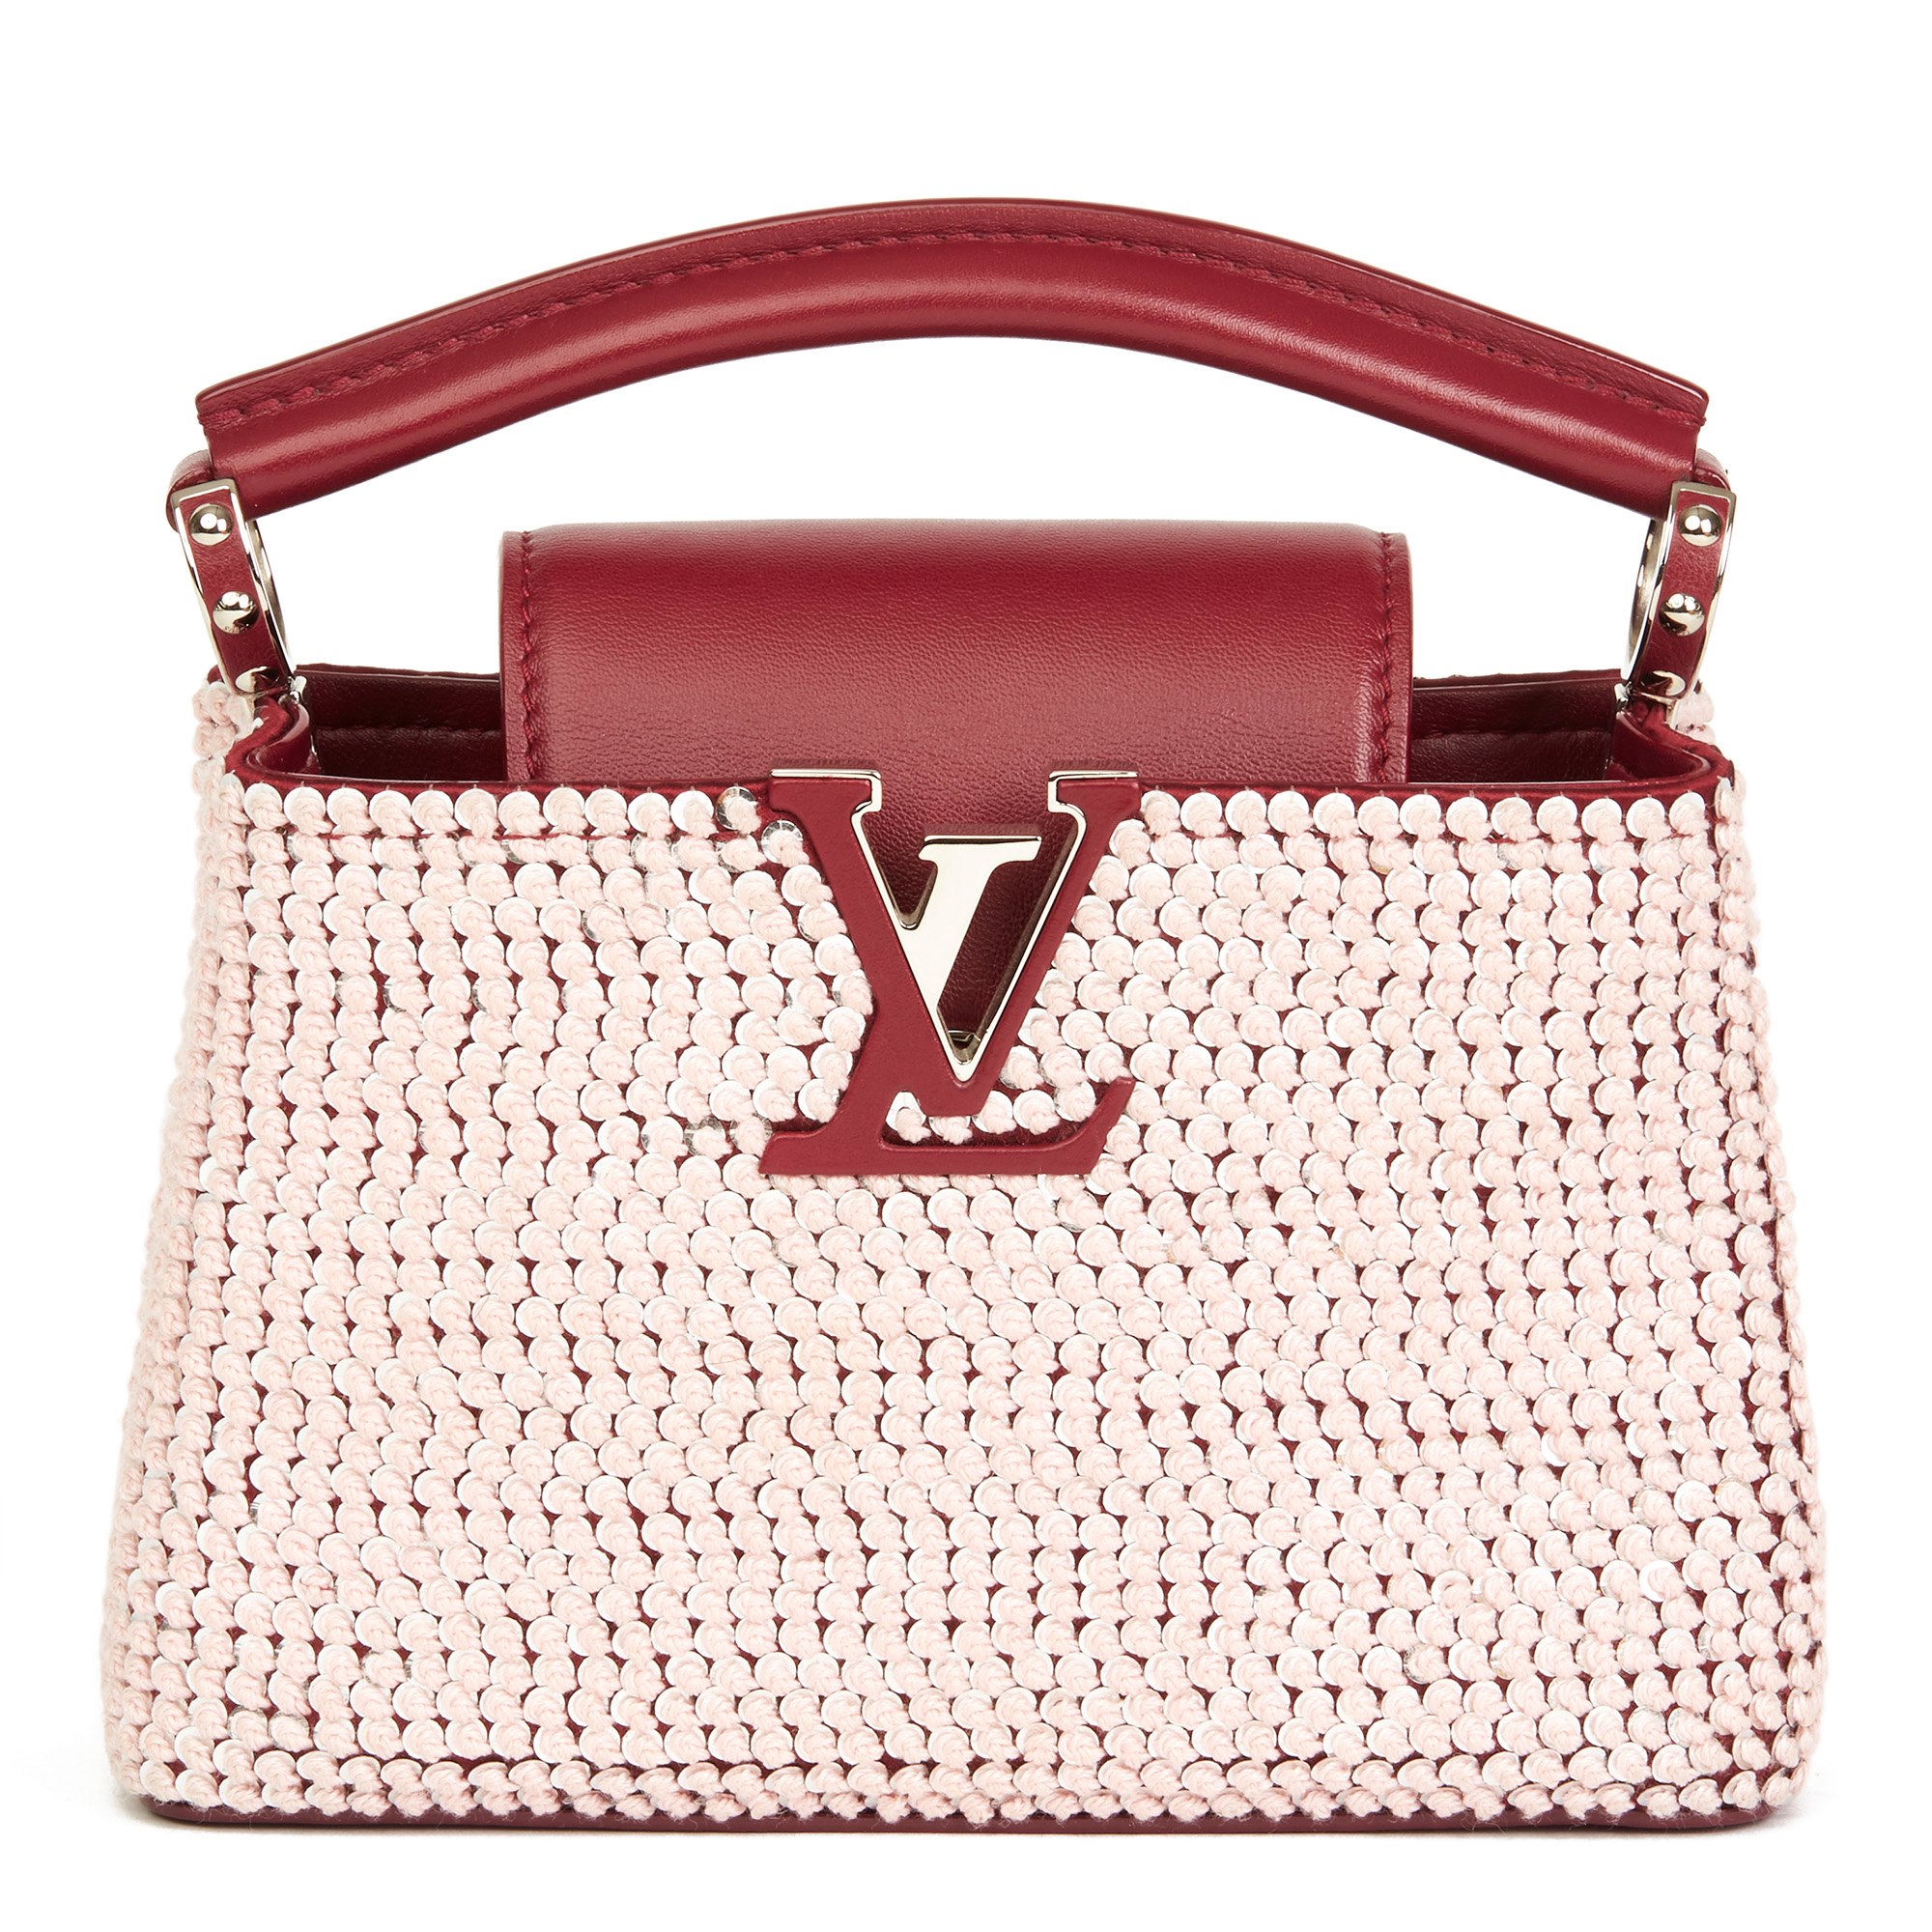 Louis Vuitton Capucines Mini Bag worn by Charlize Theron Sugarfish